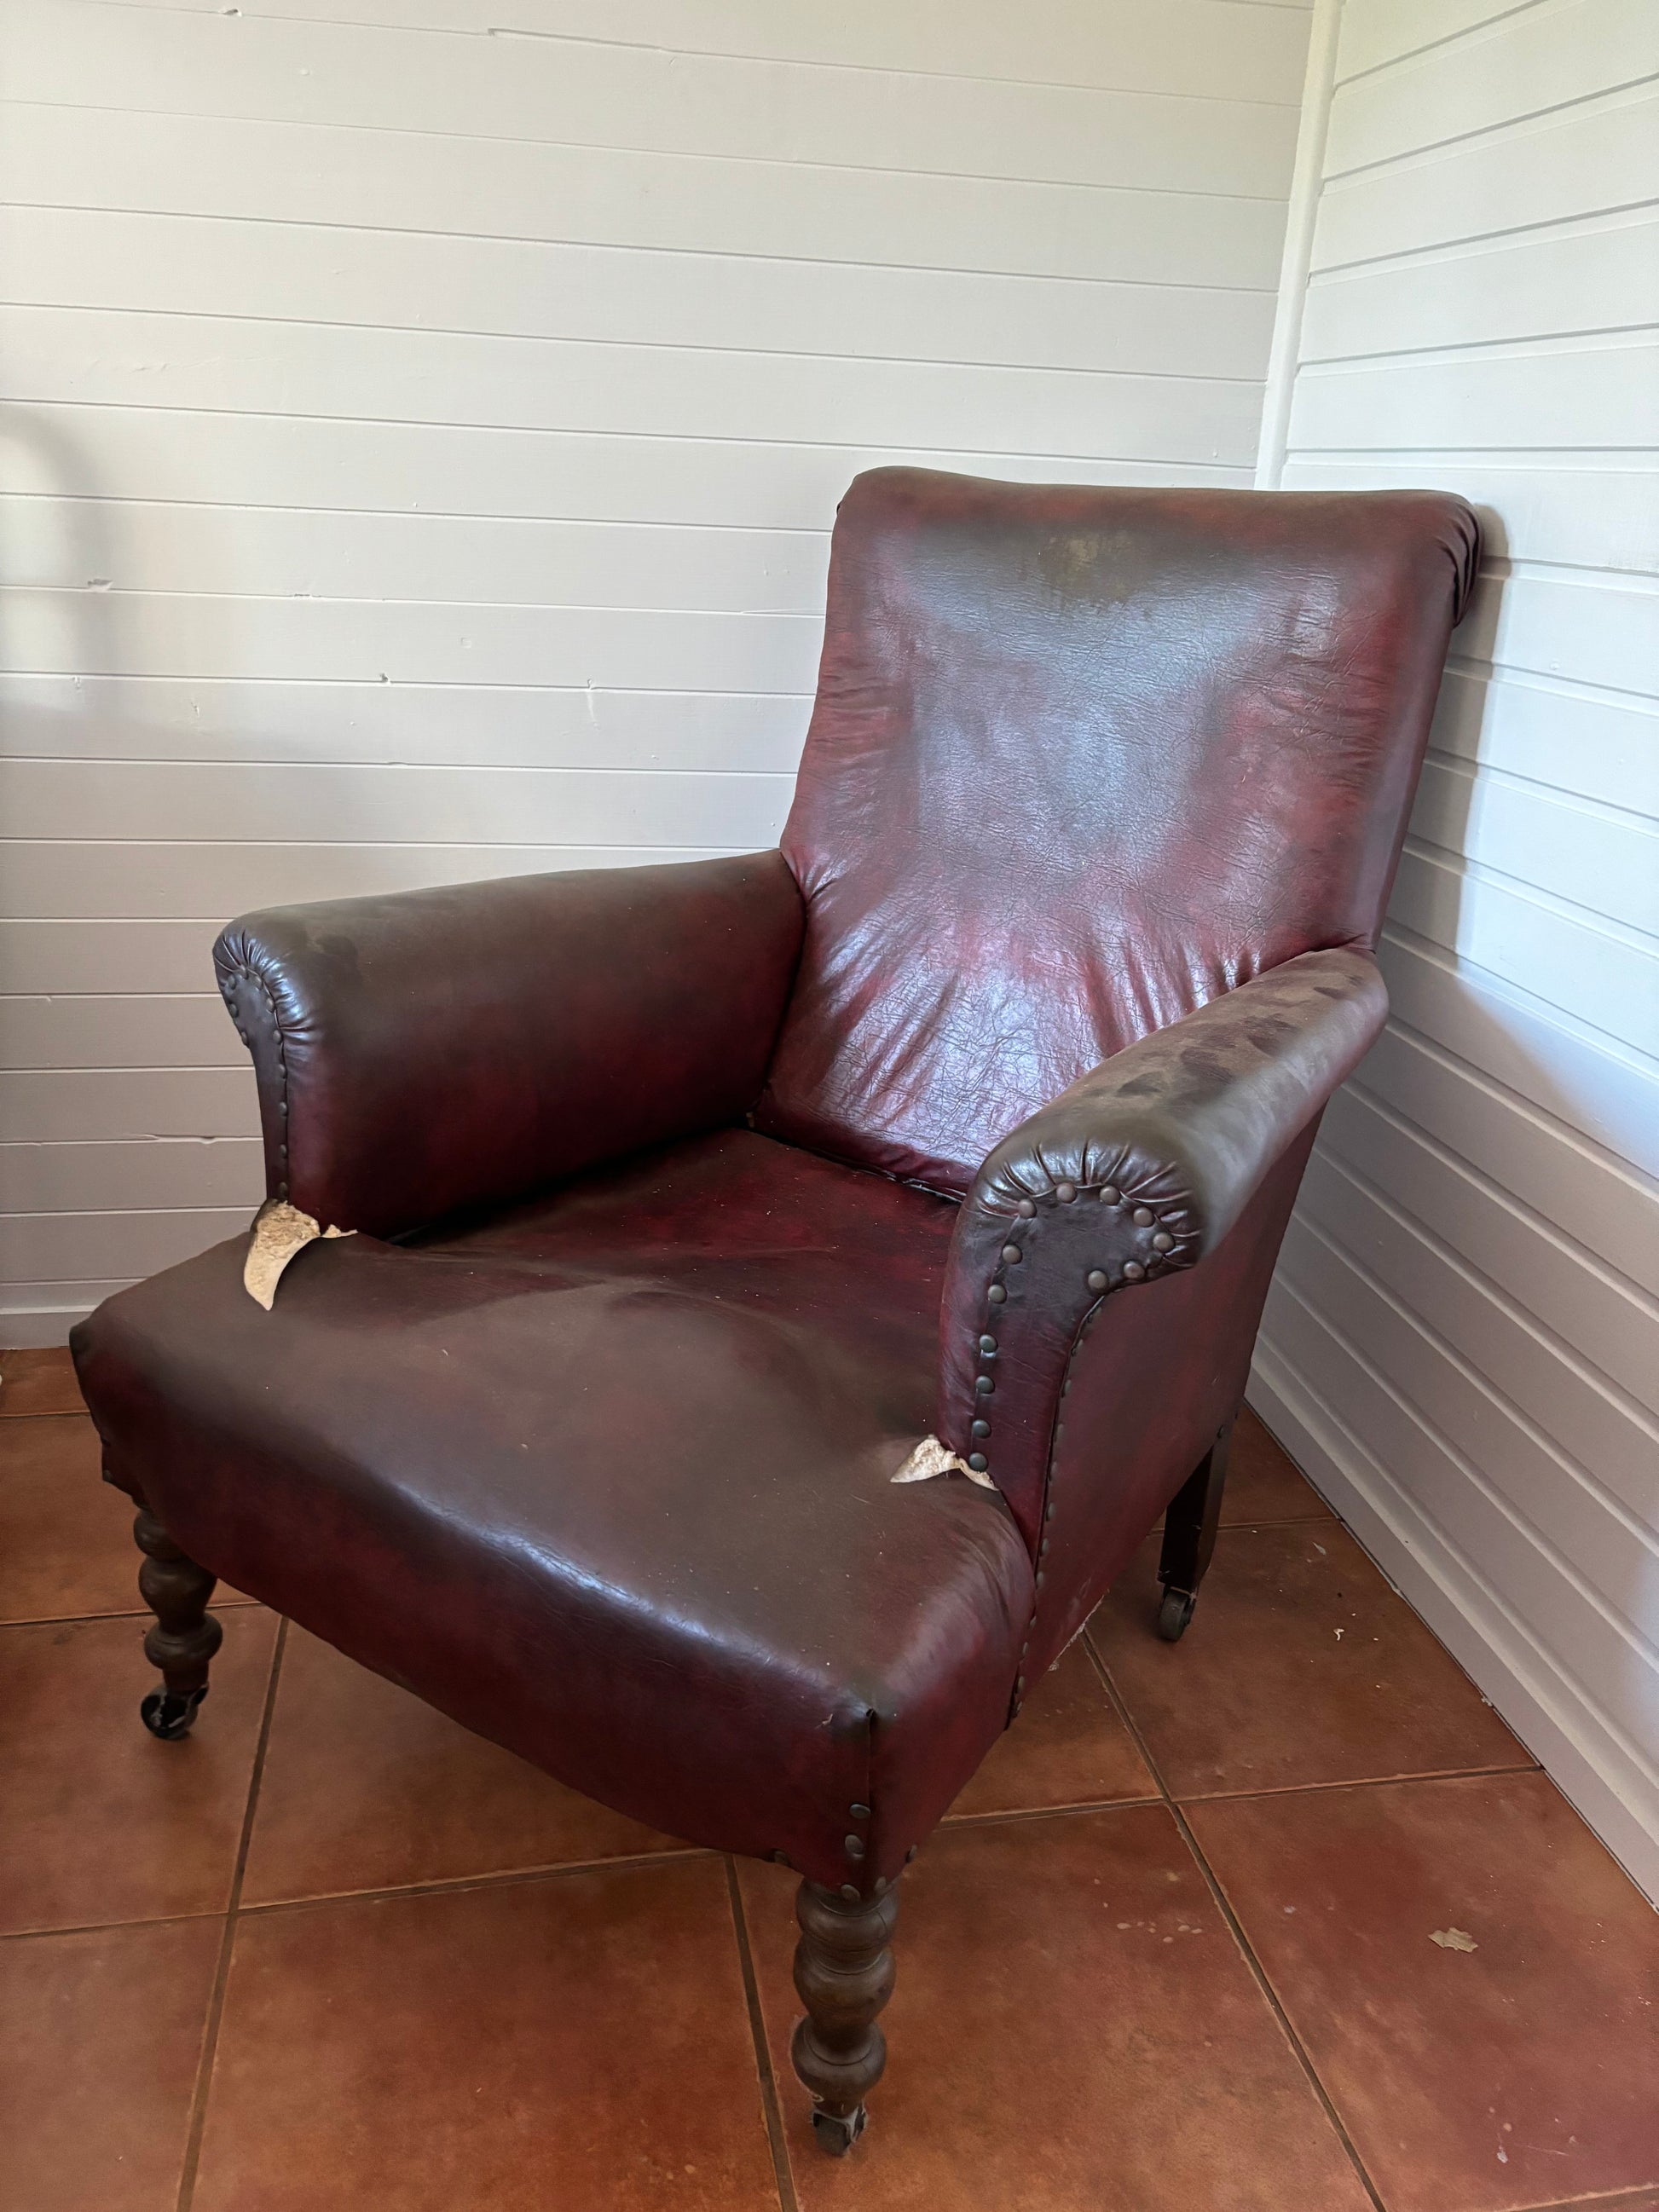 Original Victorian Armchair ready for restoration